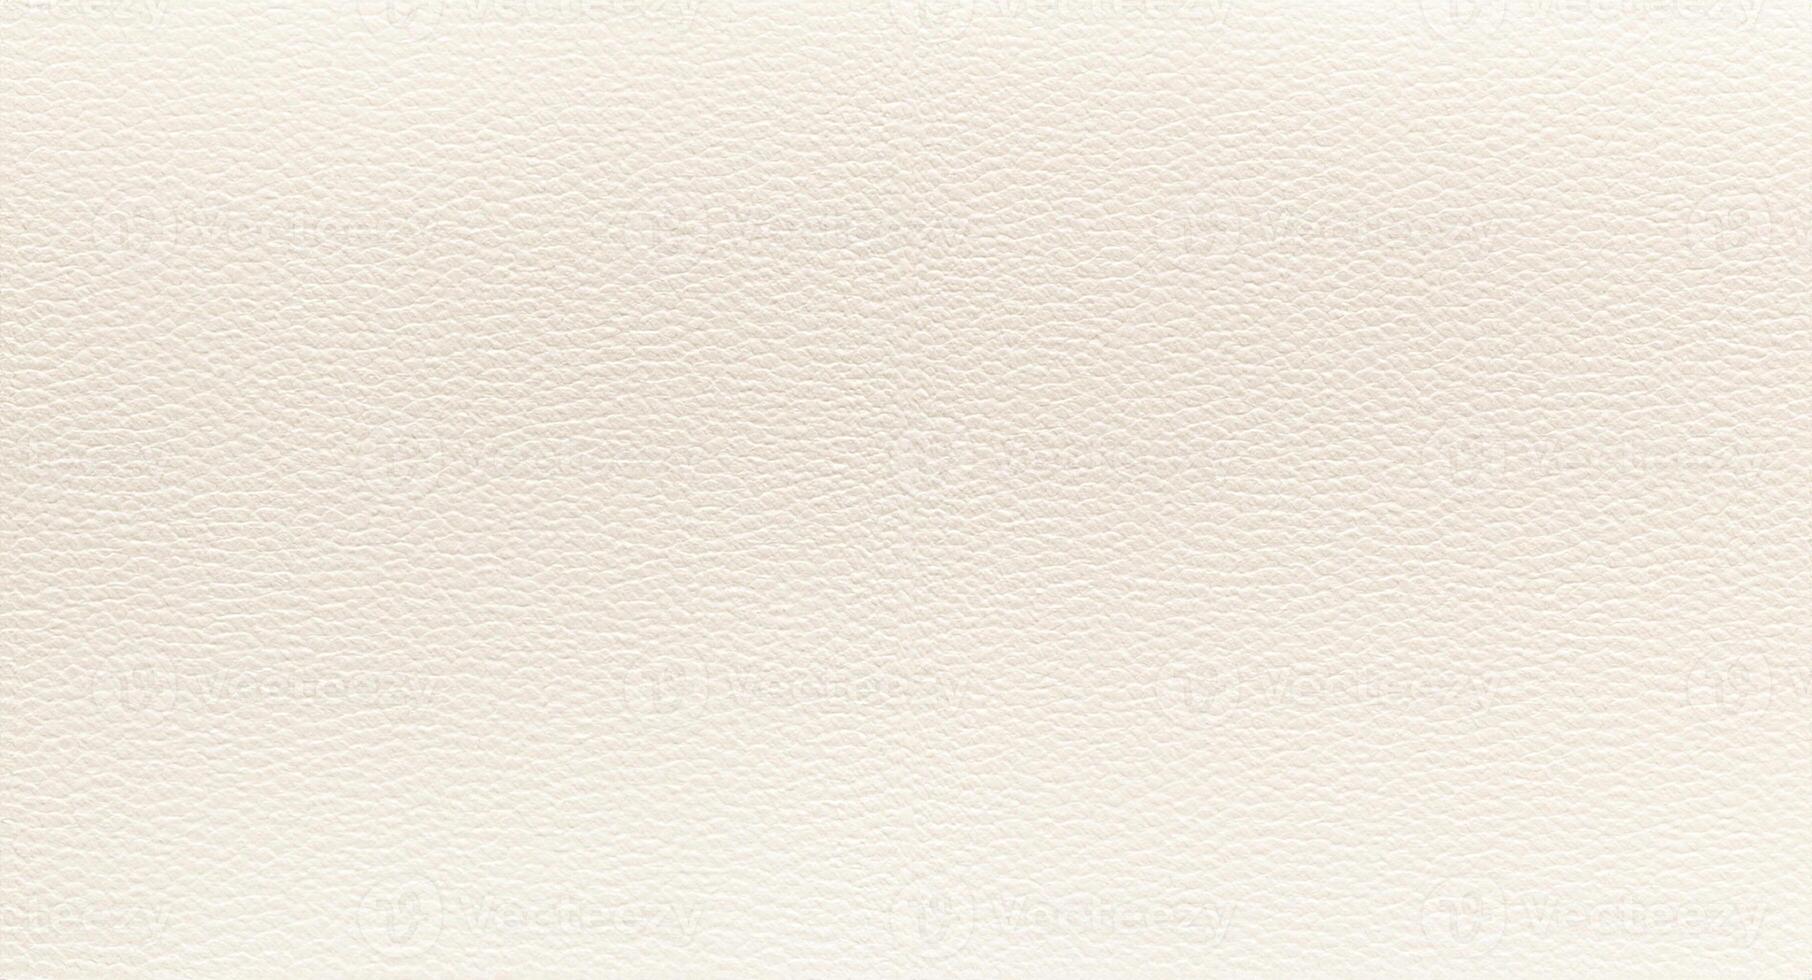 fondo de lujo de textura de cuero blanco foto